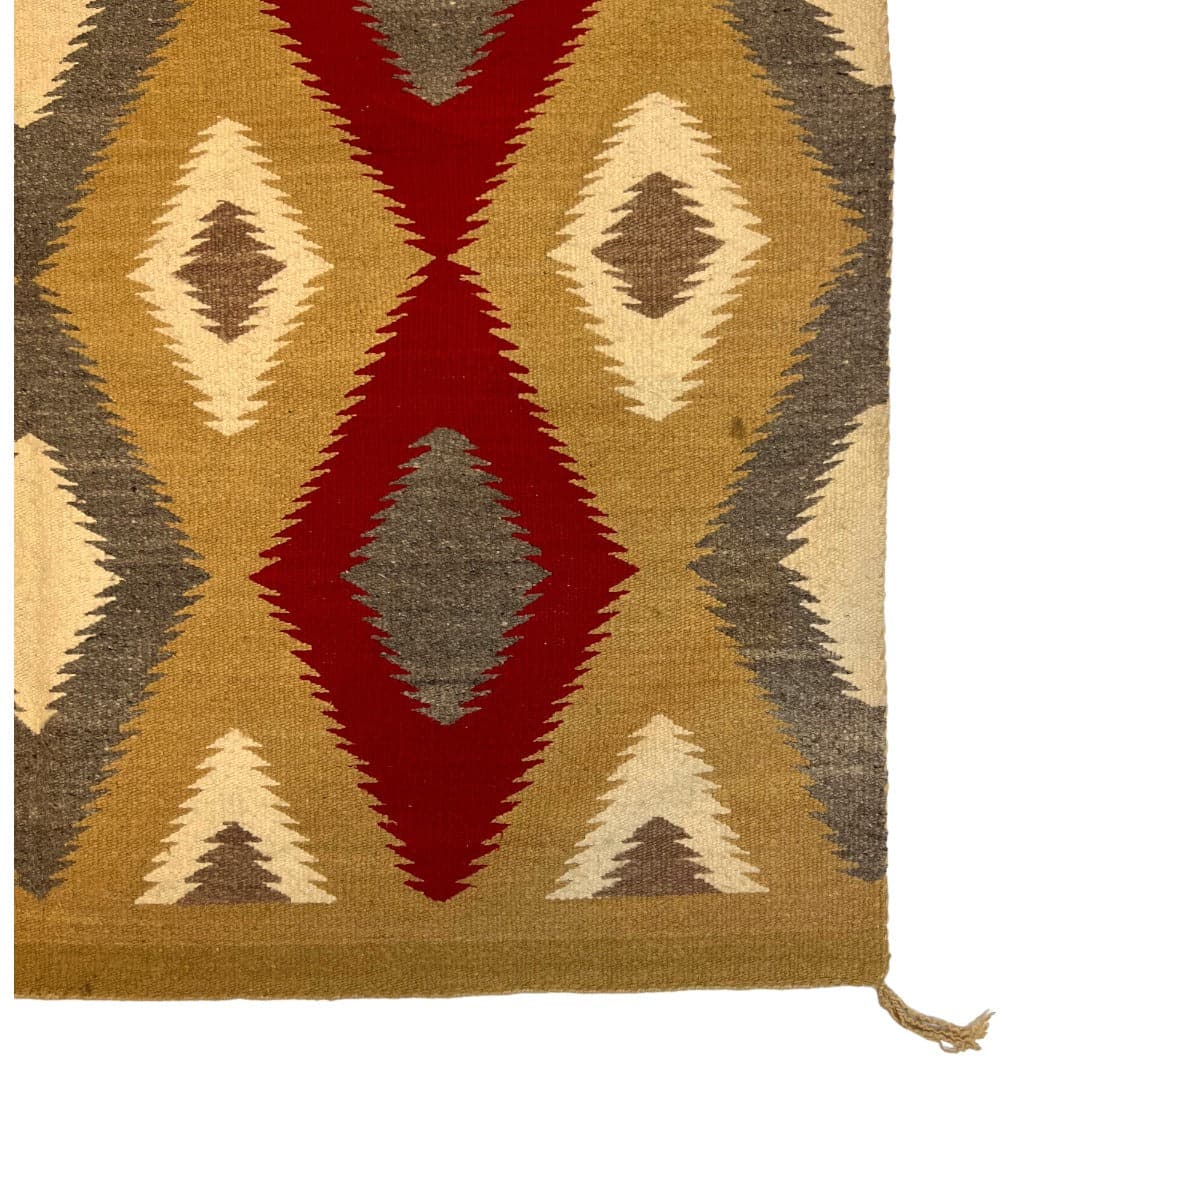 Navajo Chinle Rug c. 1930-40s, 79.25" x 50.75" (T6179) 1